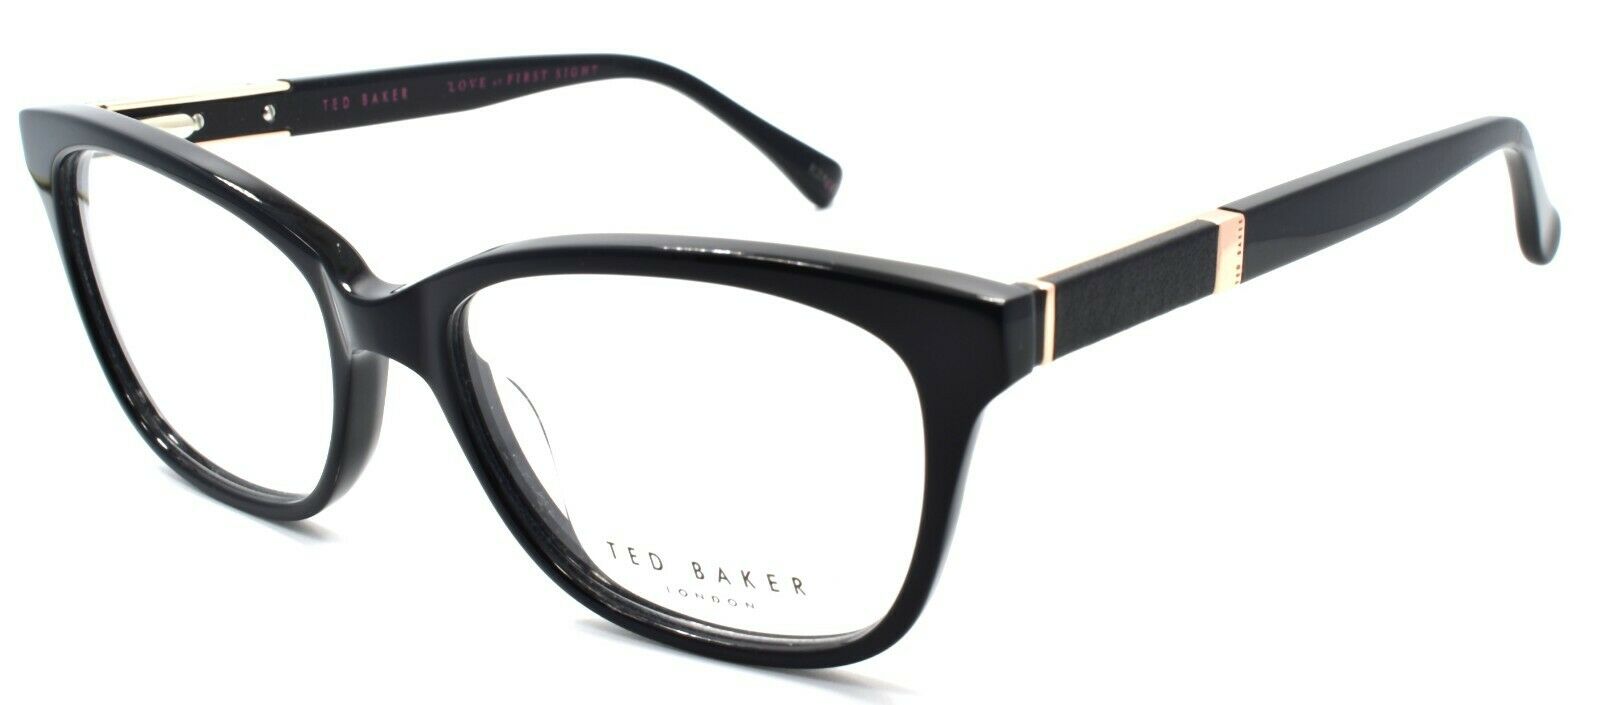 2-Ted Baker Senna 9124 001 Women's Eyeglasses Frames 52-16-140 Black-4894327141043-IKSpecs